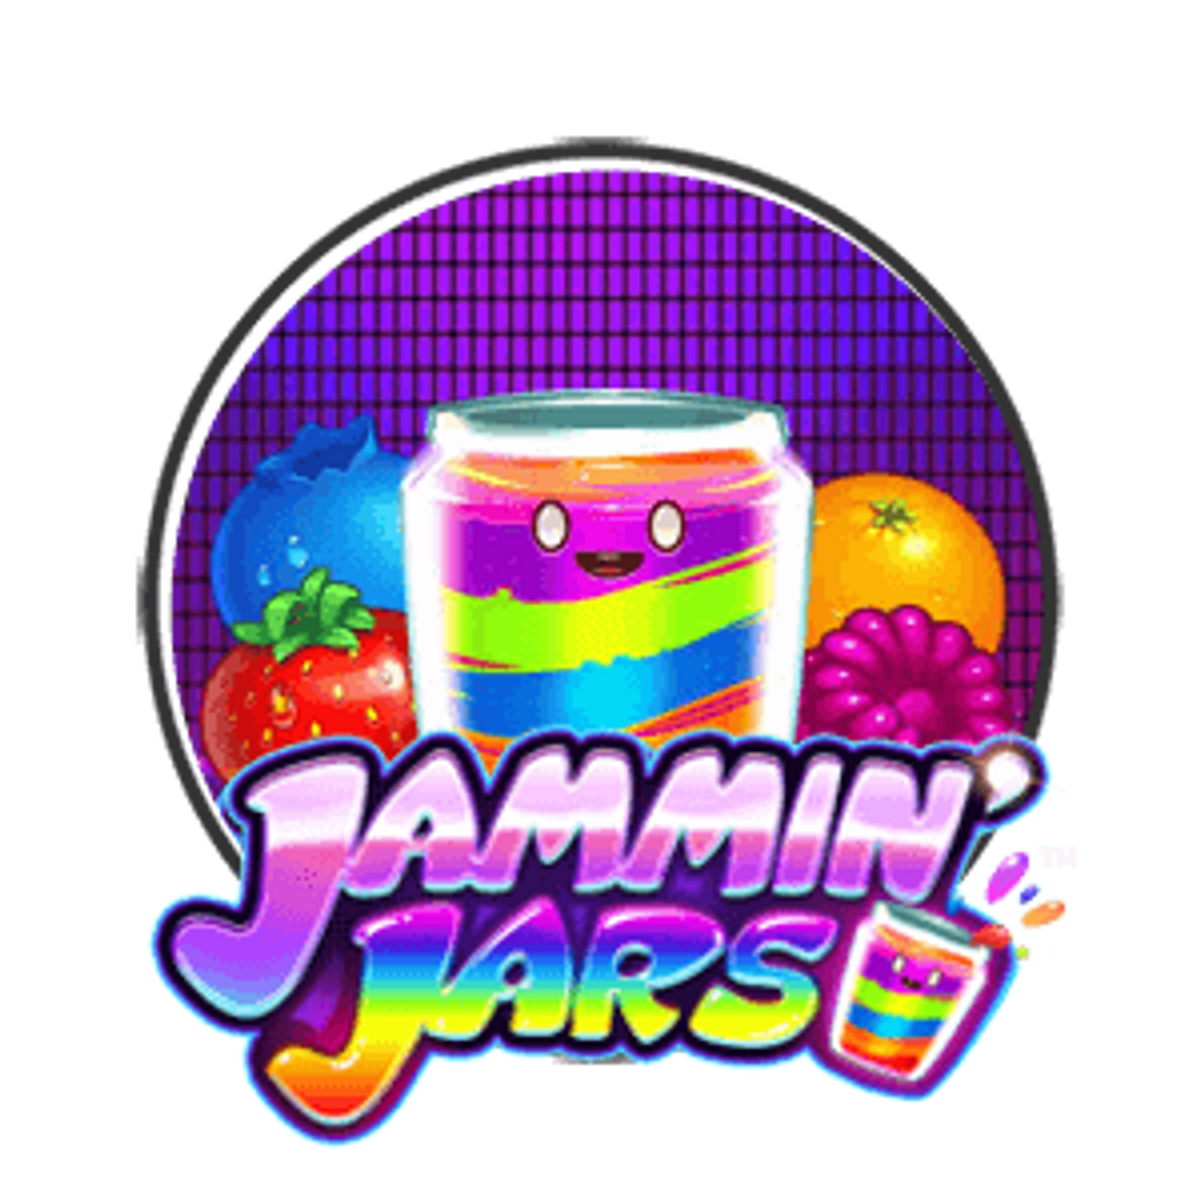 jammin jars online casino